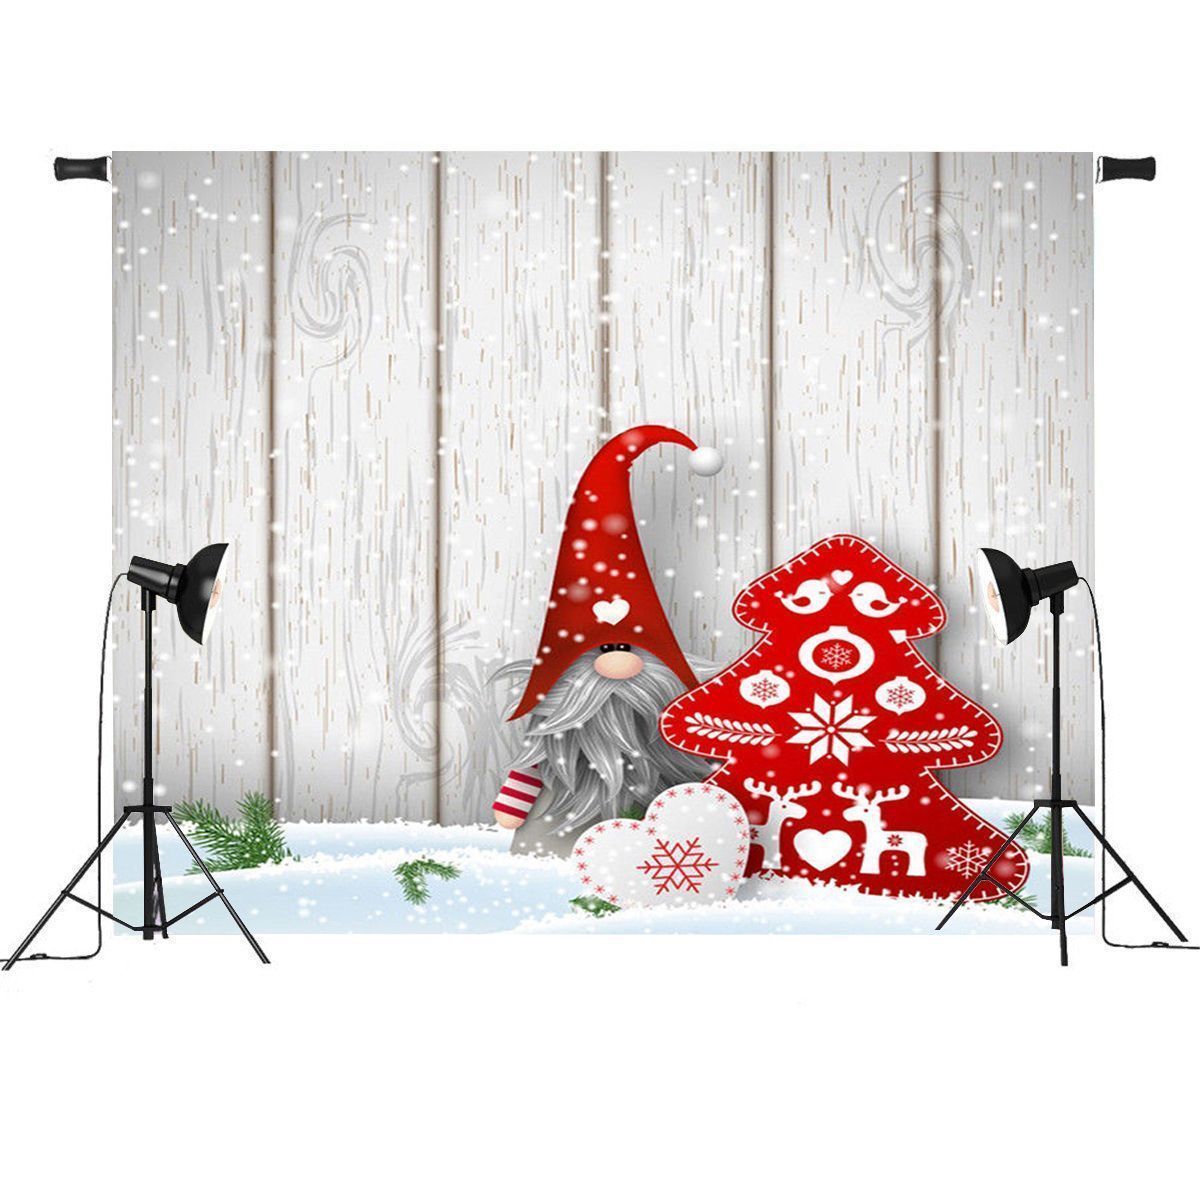 7x5FT-Cartoon-Santa-Claus-Christmas-Wooden-Board-Photography-Backdrop-Studio-Prop-Background-1391372